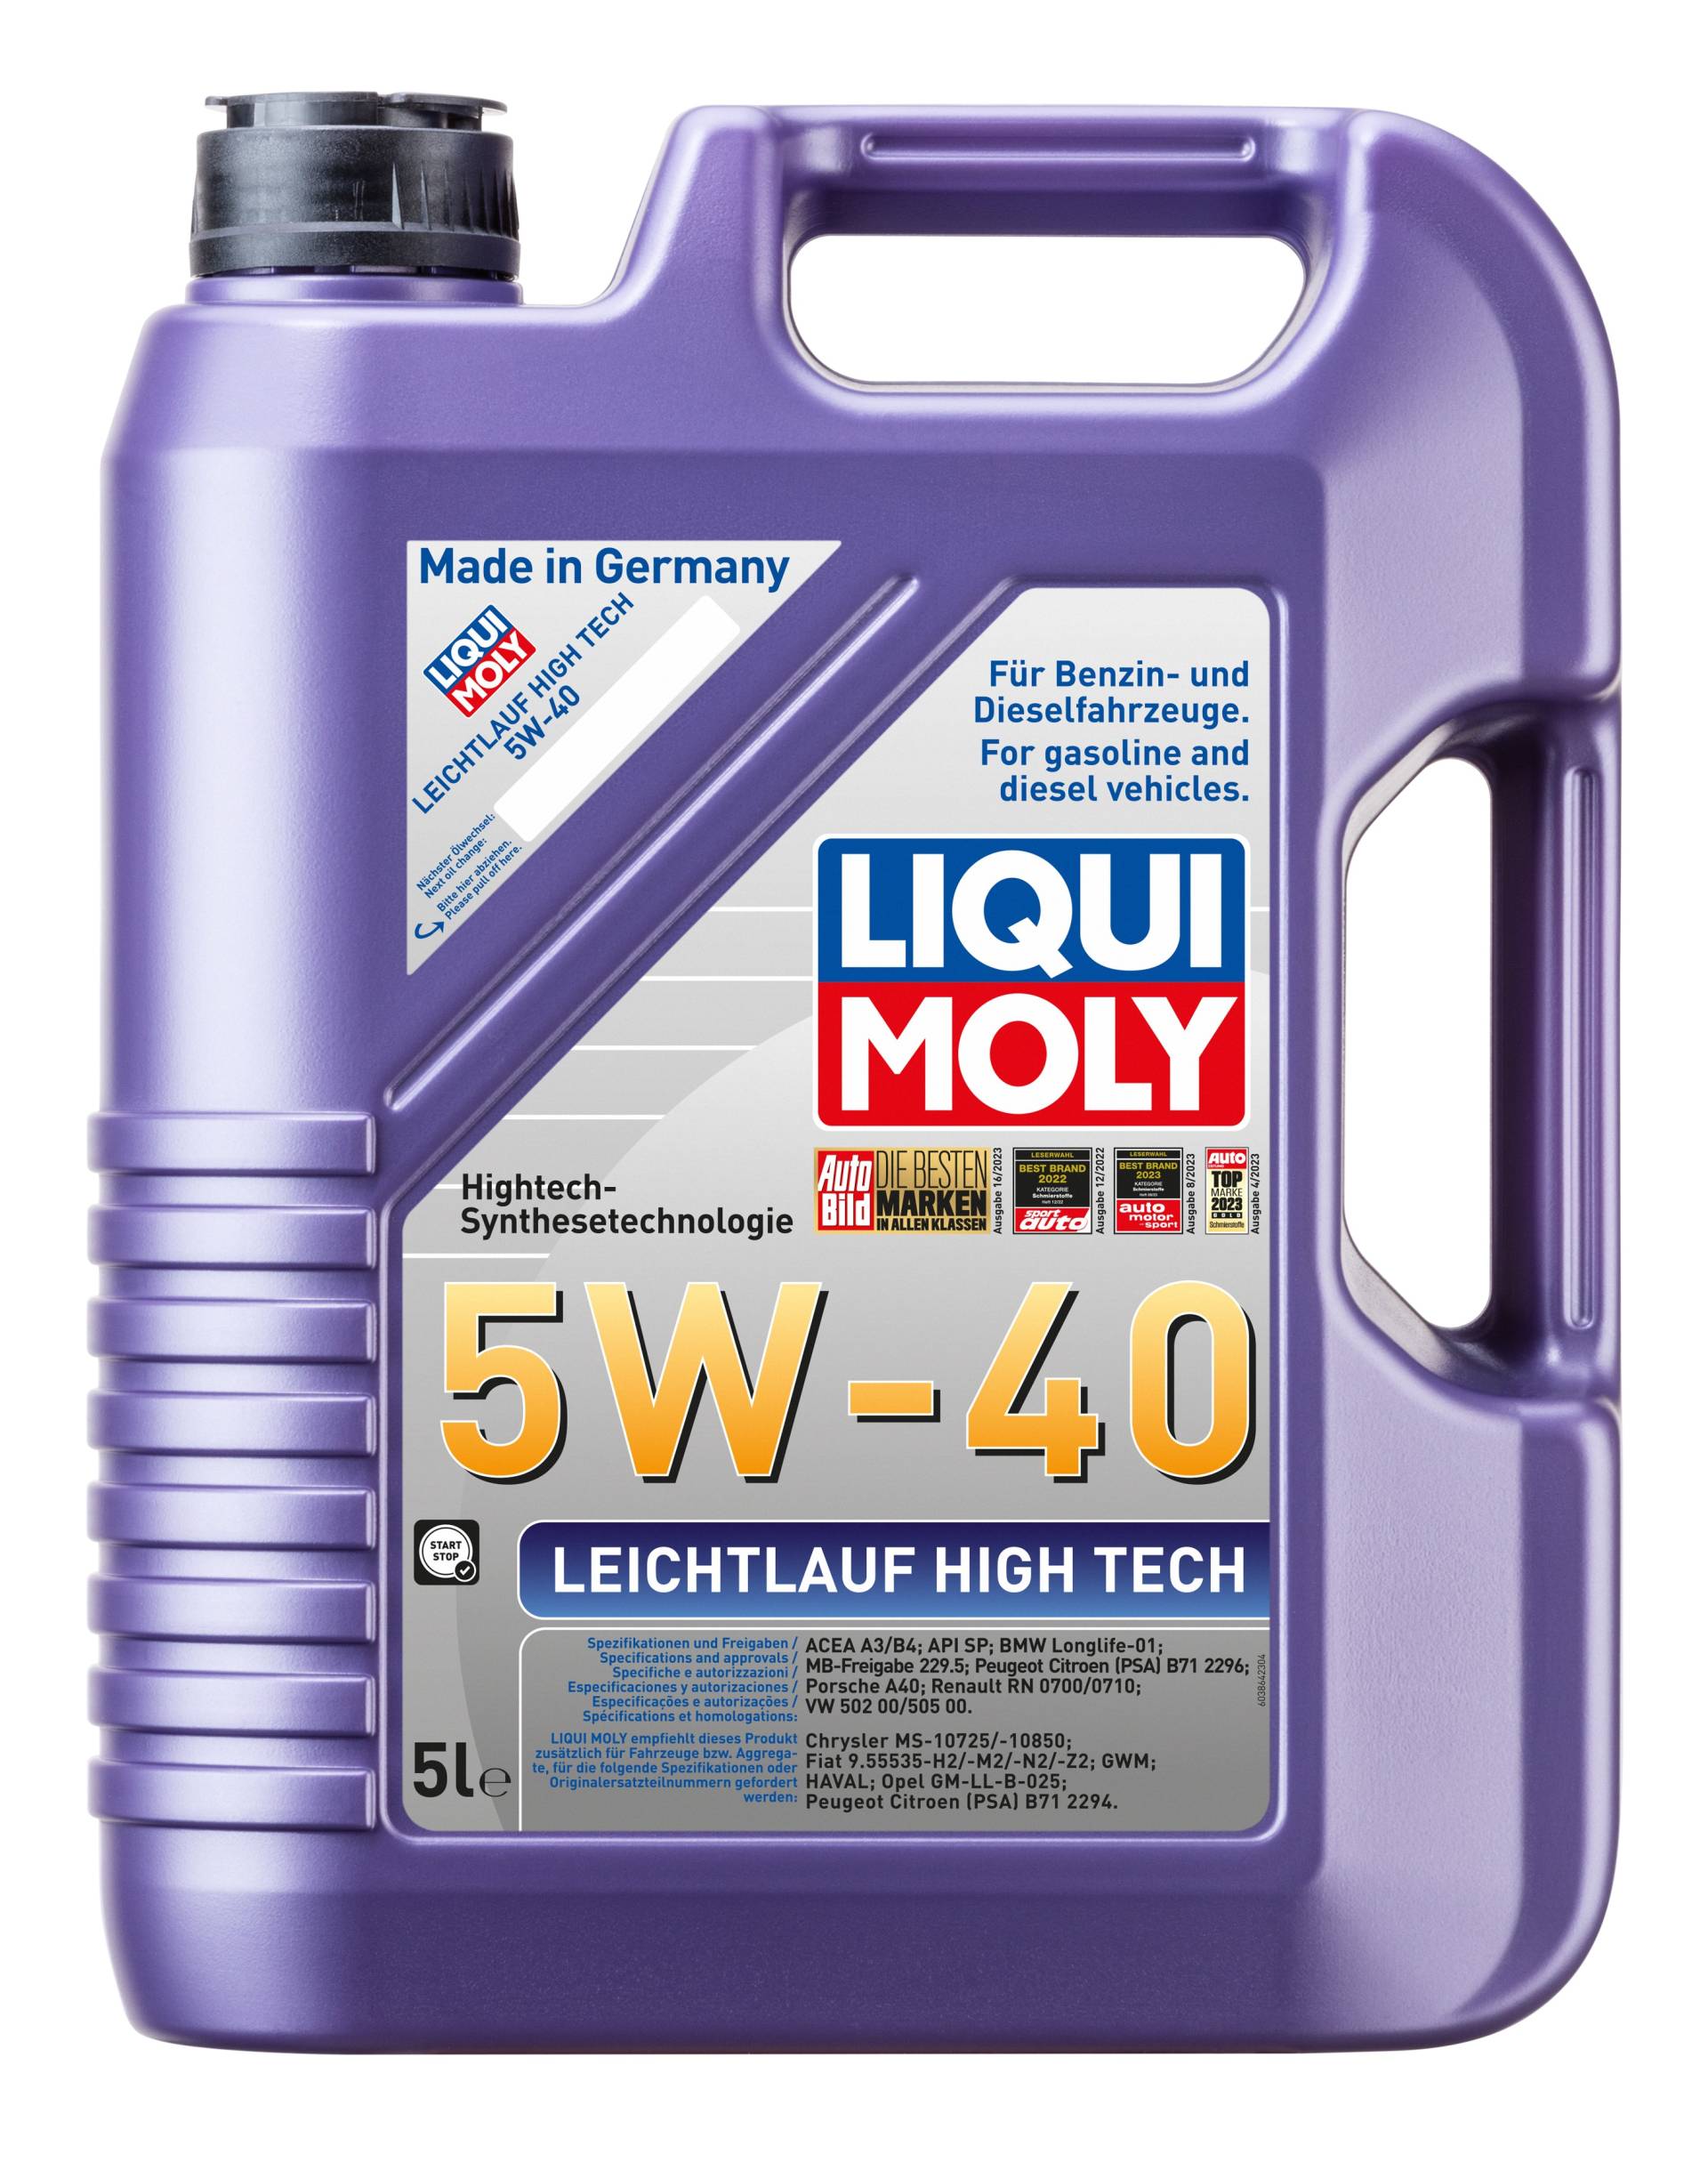 Liqui Moly Leichtlauf High Tech 5W-40 Motoröl , 5 Liter von Liqui Moly